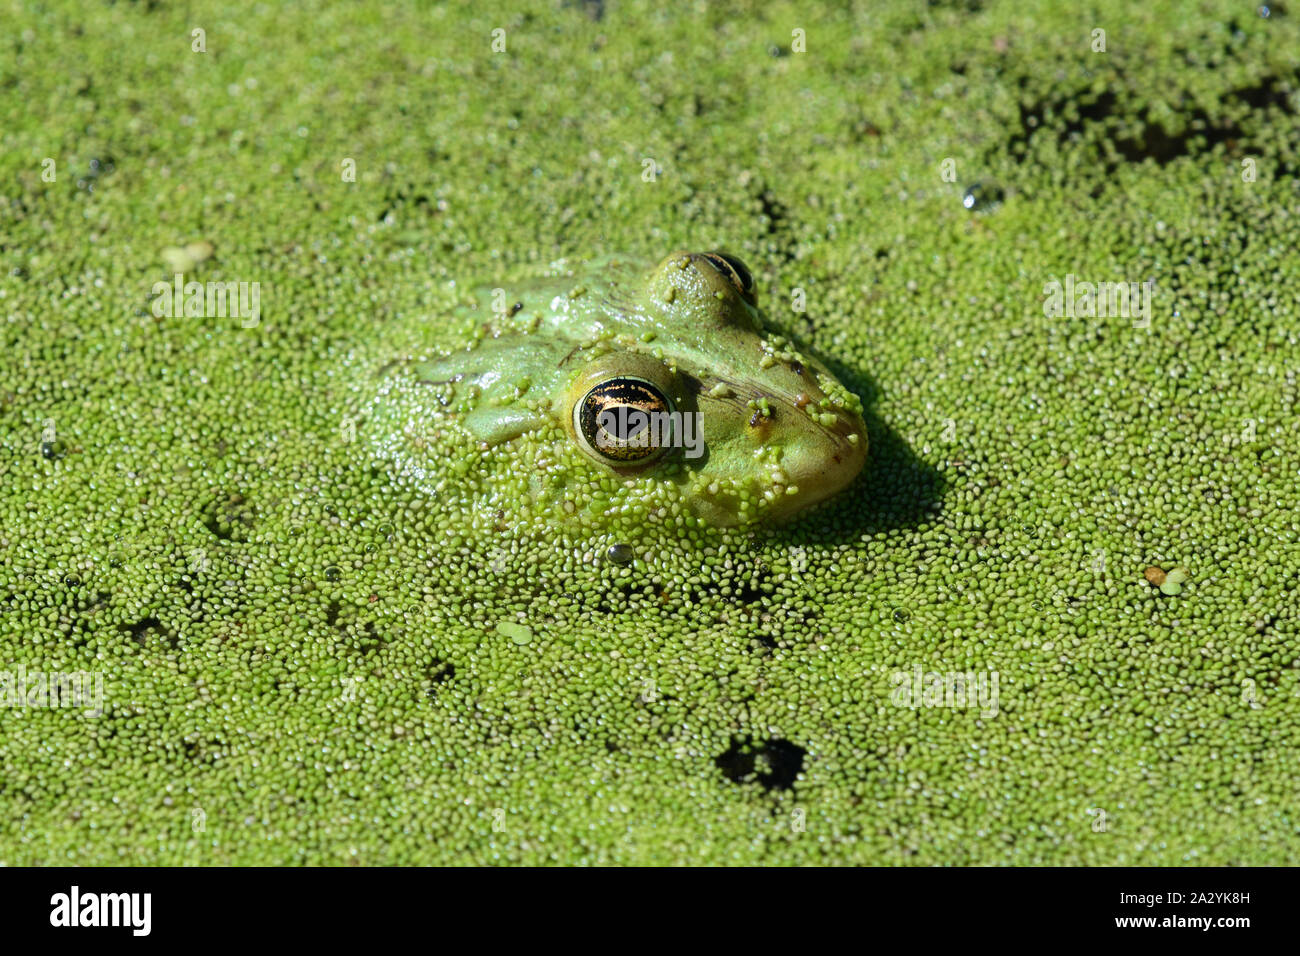 Pool Frog (Pelophylax lessonae) in Duckweed (Lemna minuta) covered pond Stock Photo